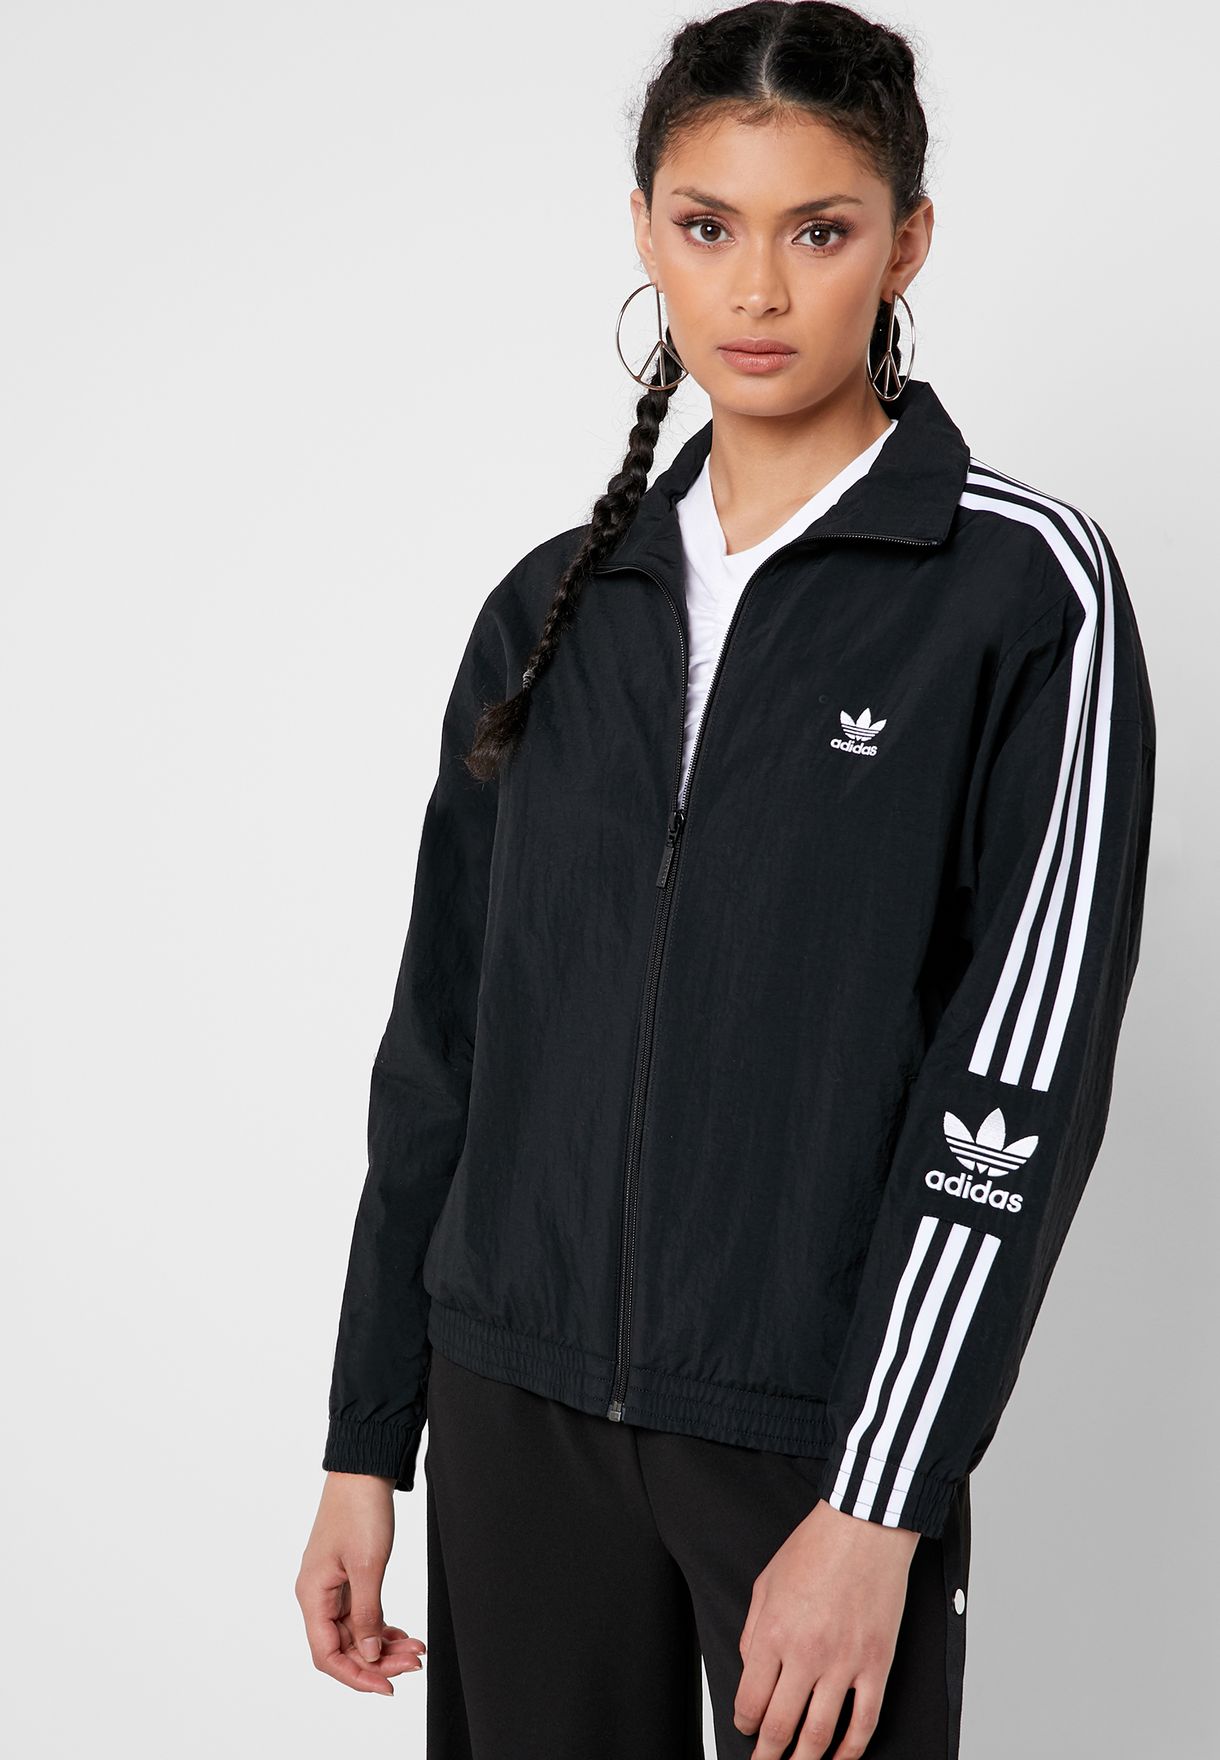 Adidas stripe jacket